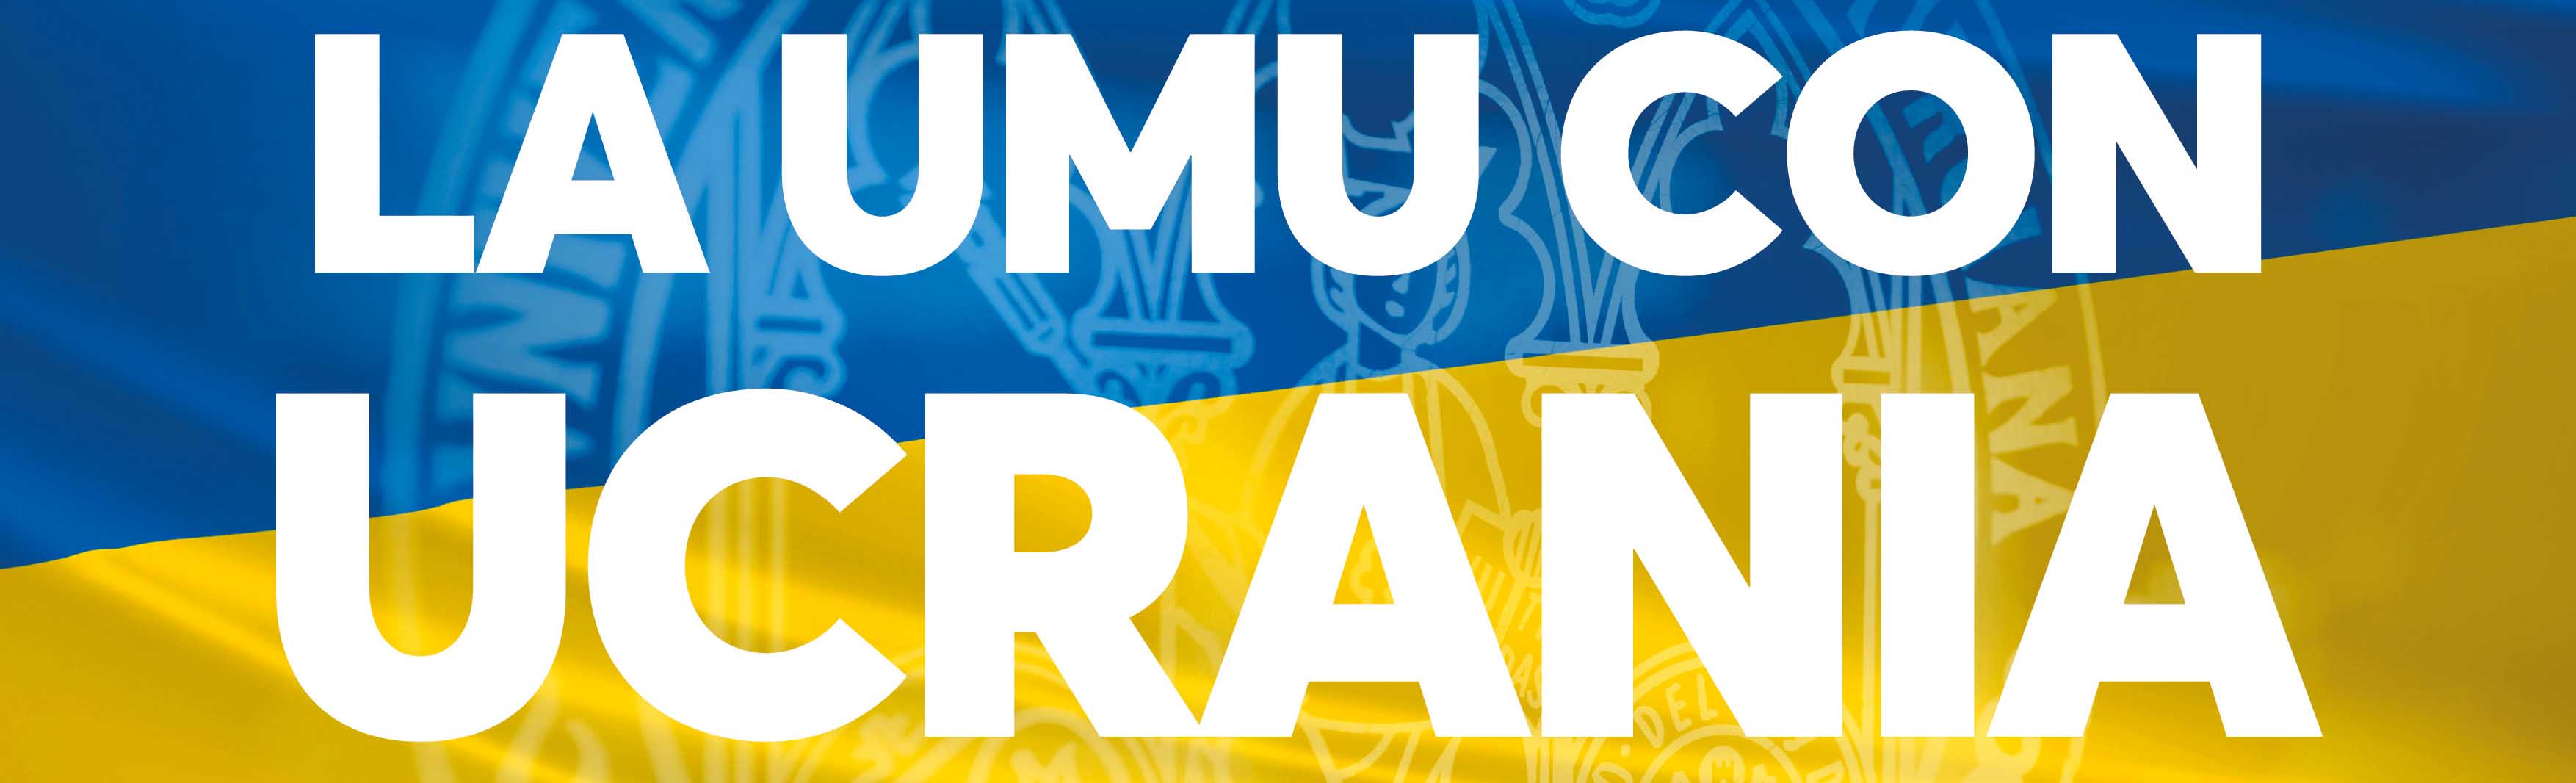 La UMU con Ucrania Imagen